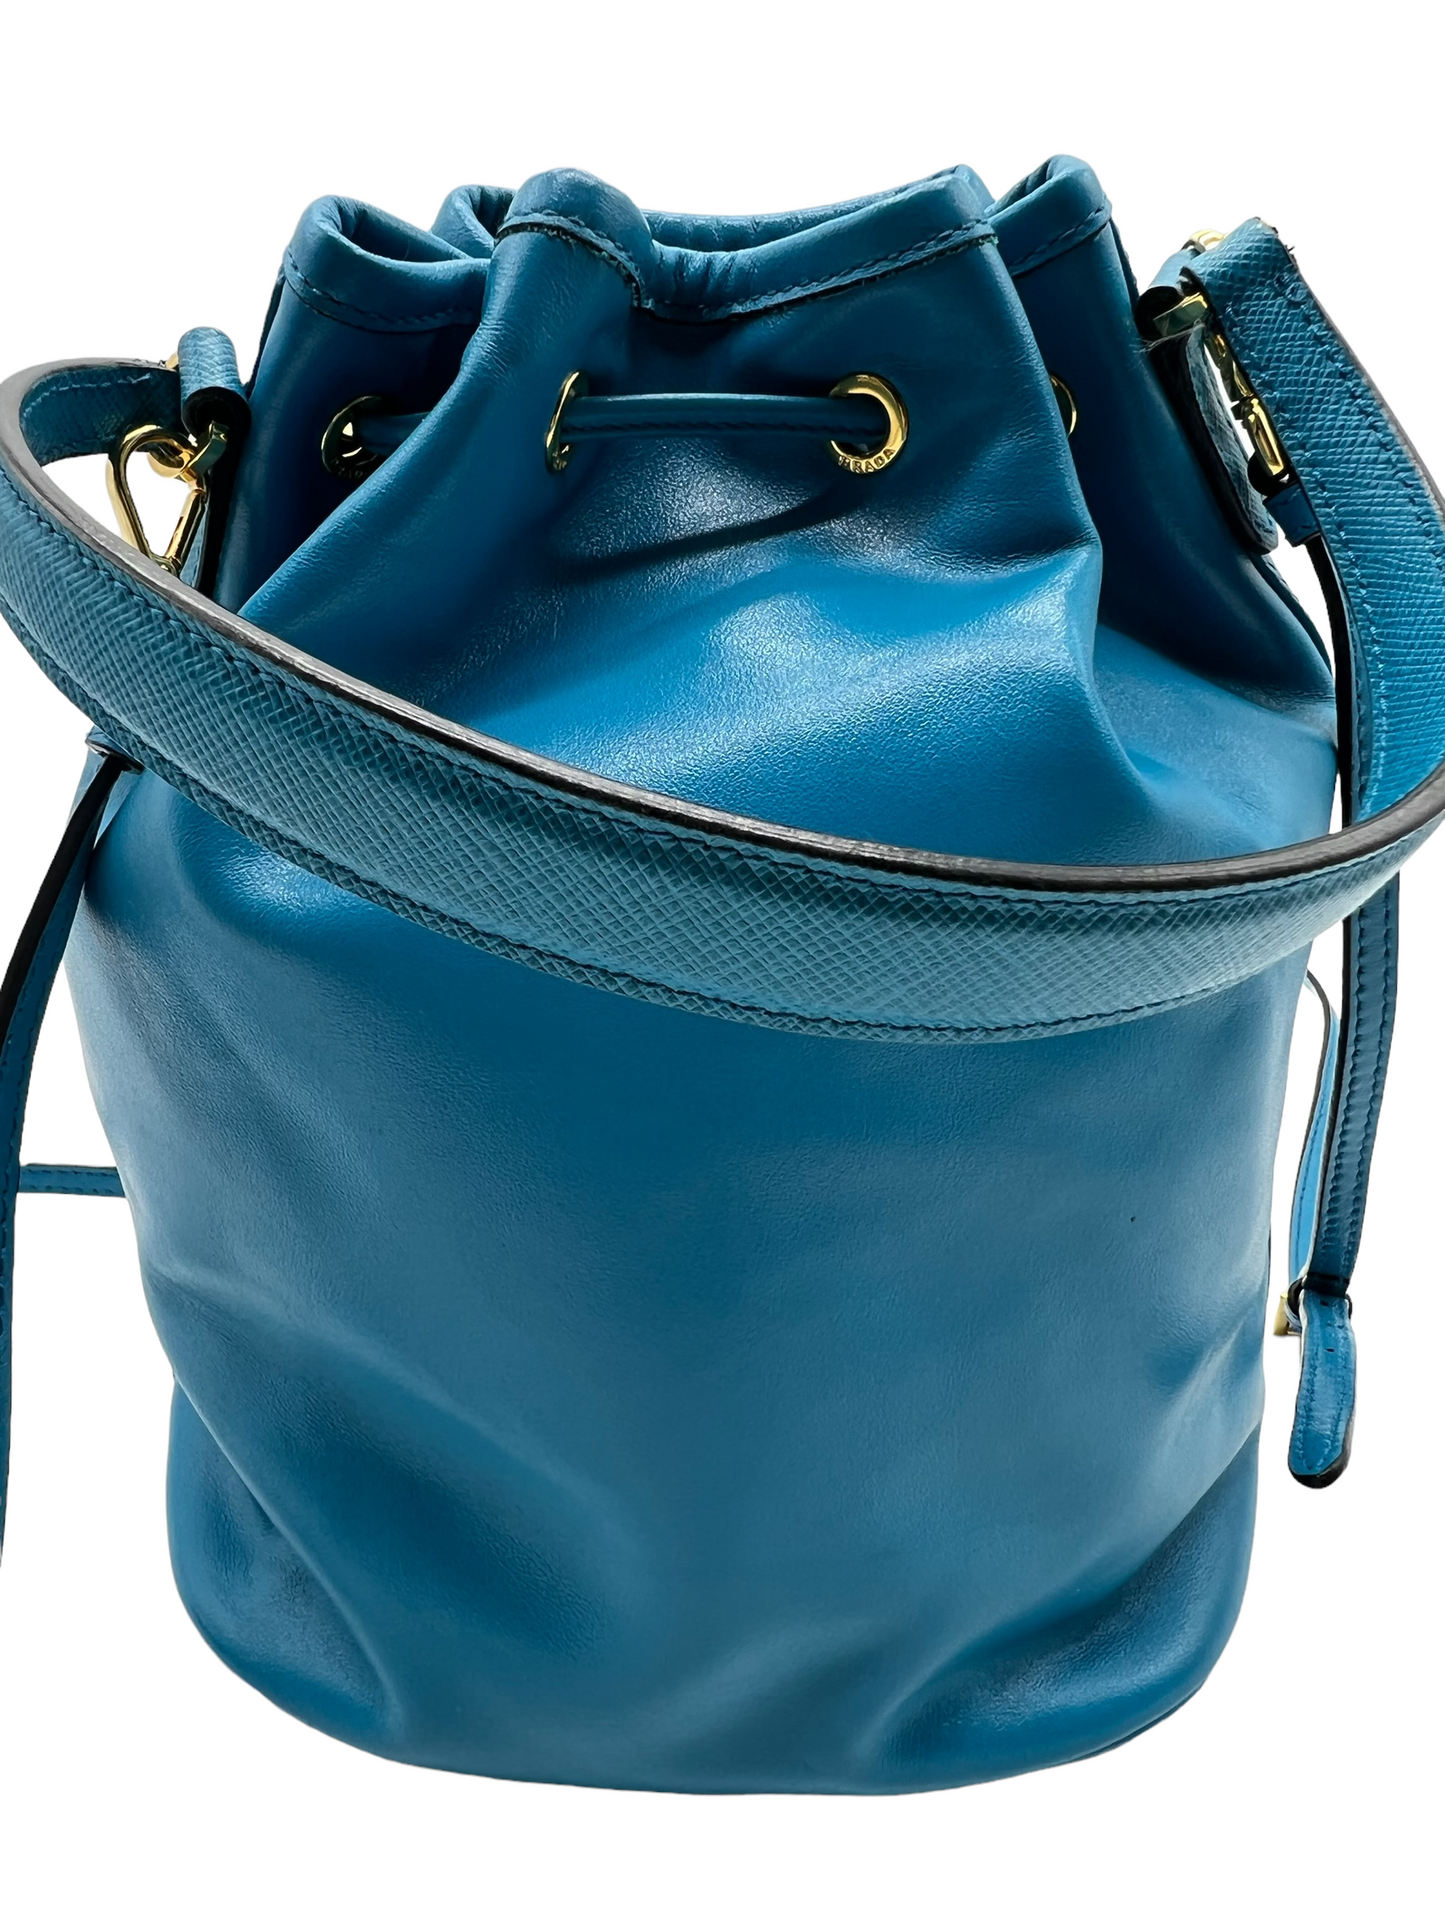 Prada Blue Leather Small Drawstring Bucket Handbag